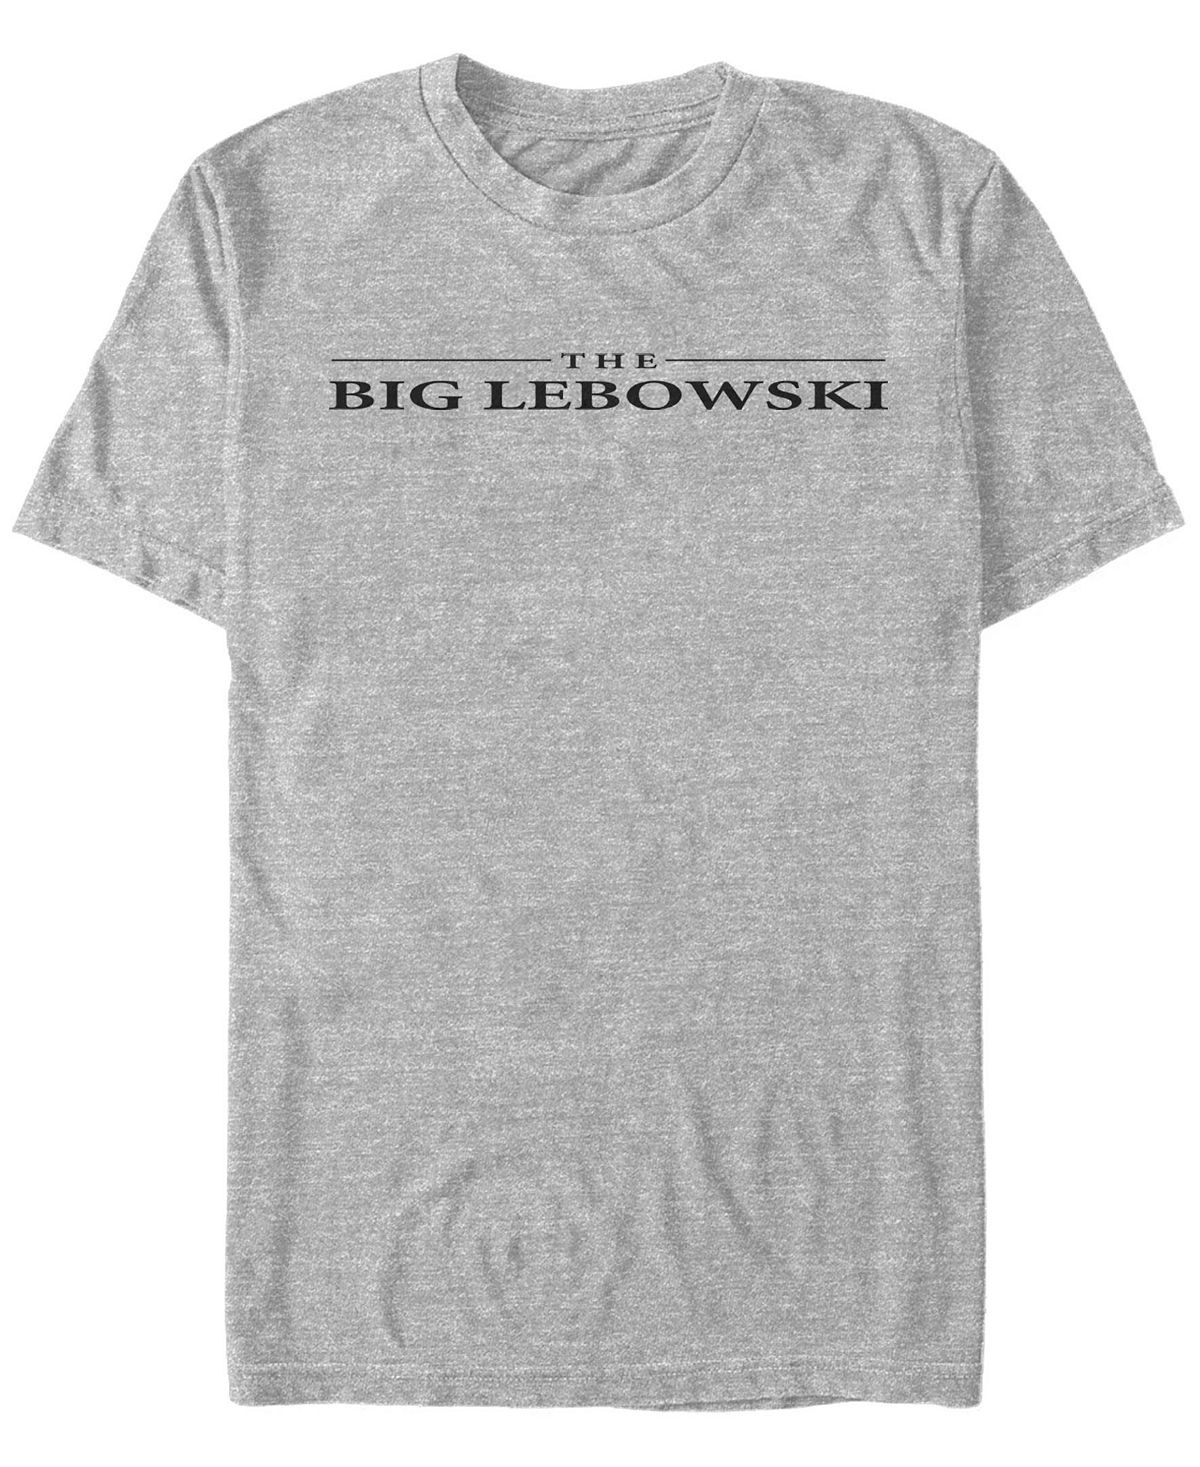 Мужская футболка с коротким рукавом с логотипом the big lebowski Fifth Sun, мульти цена и фото